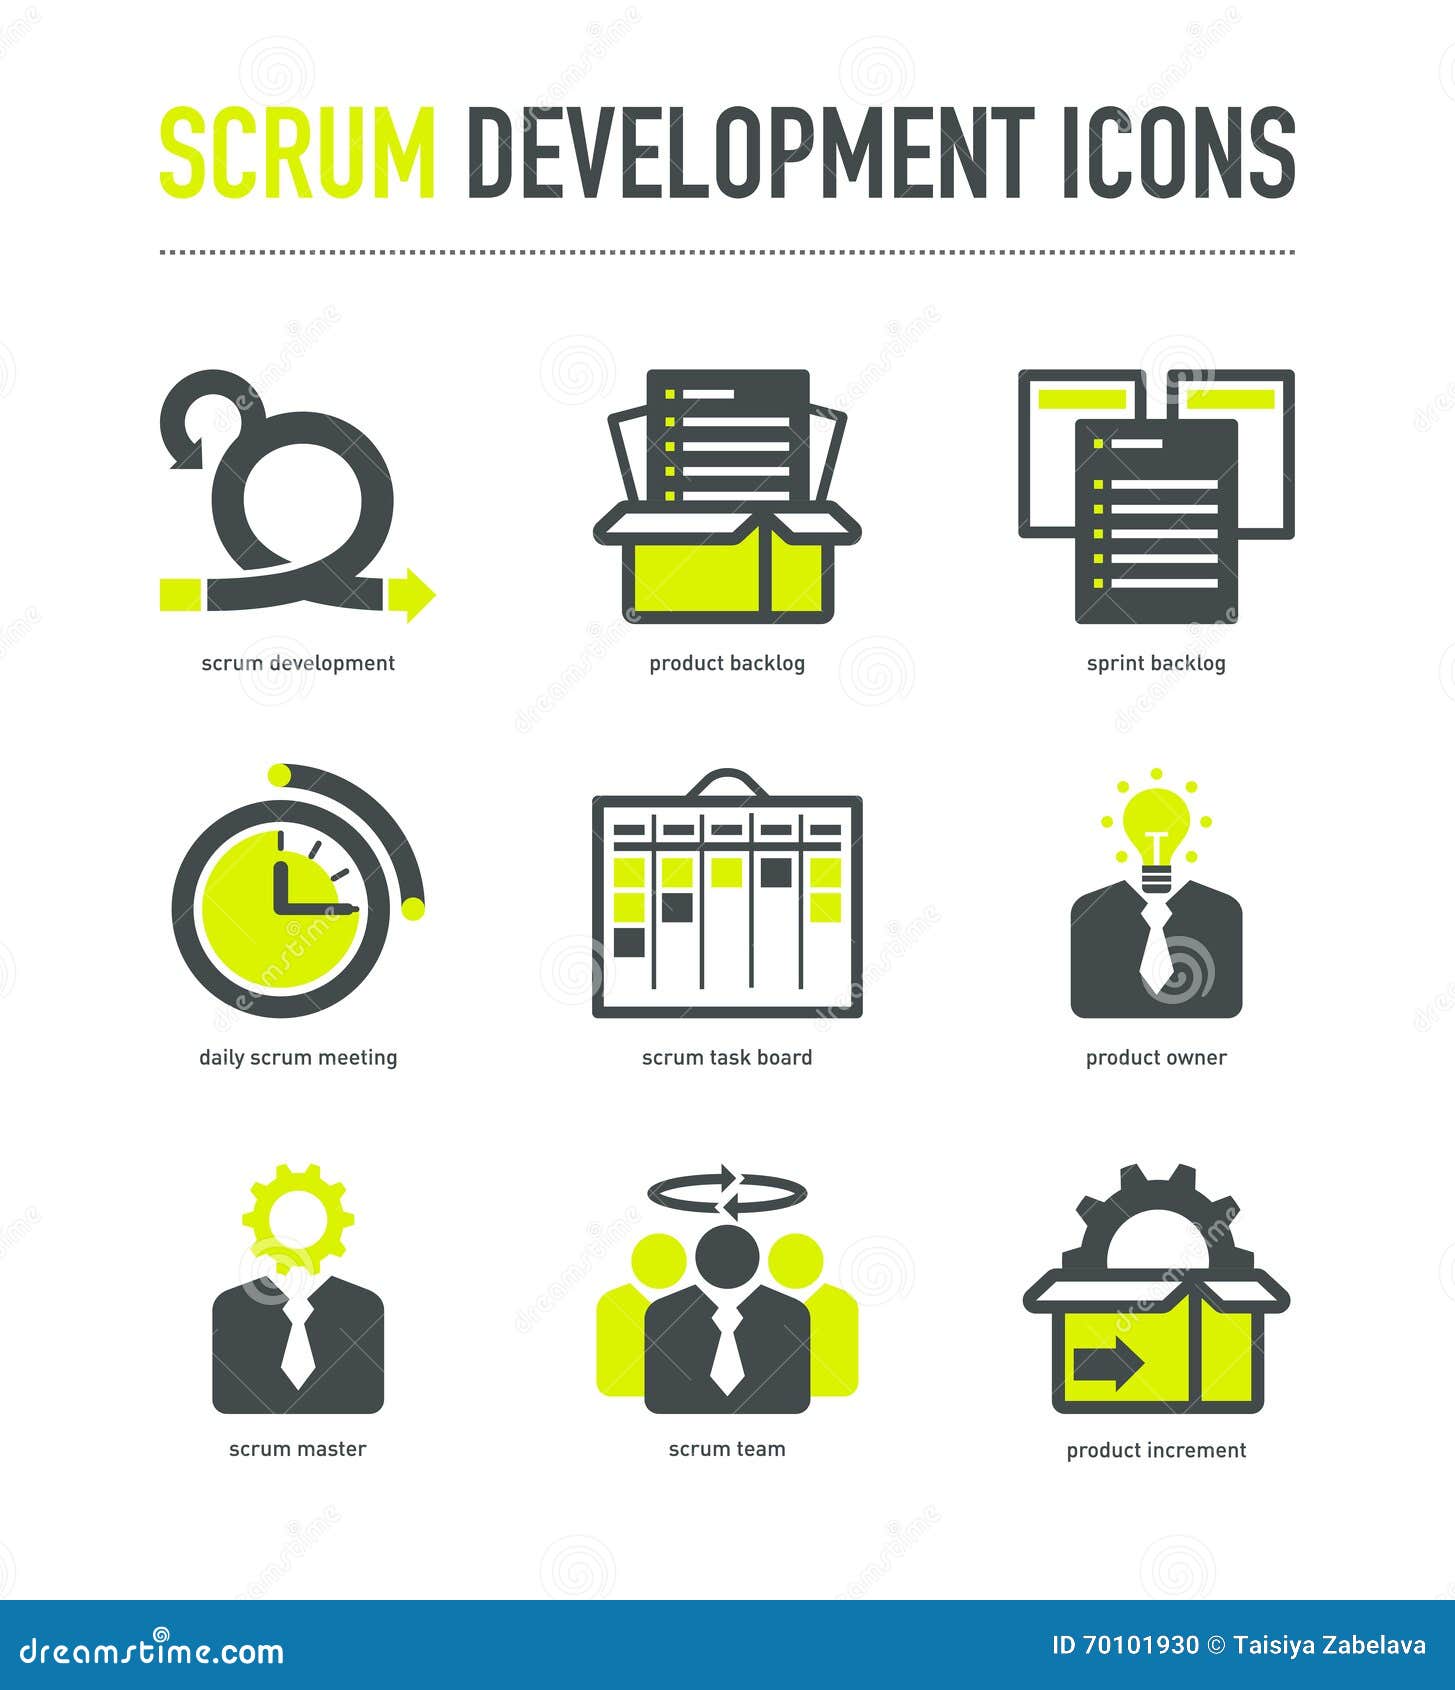 scrum development methodology icons